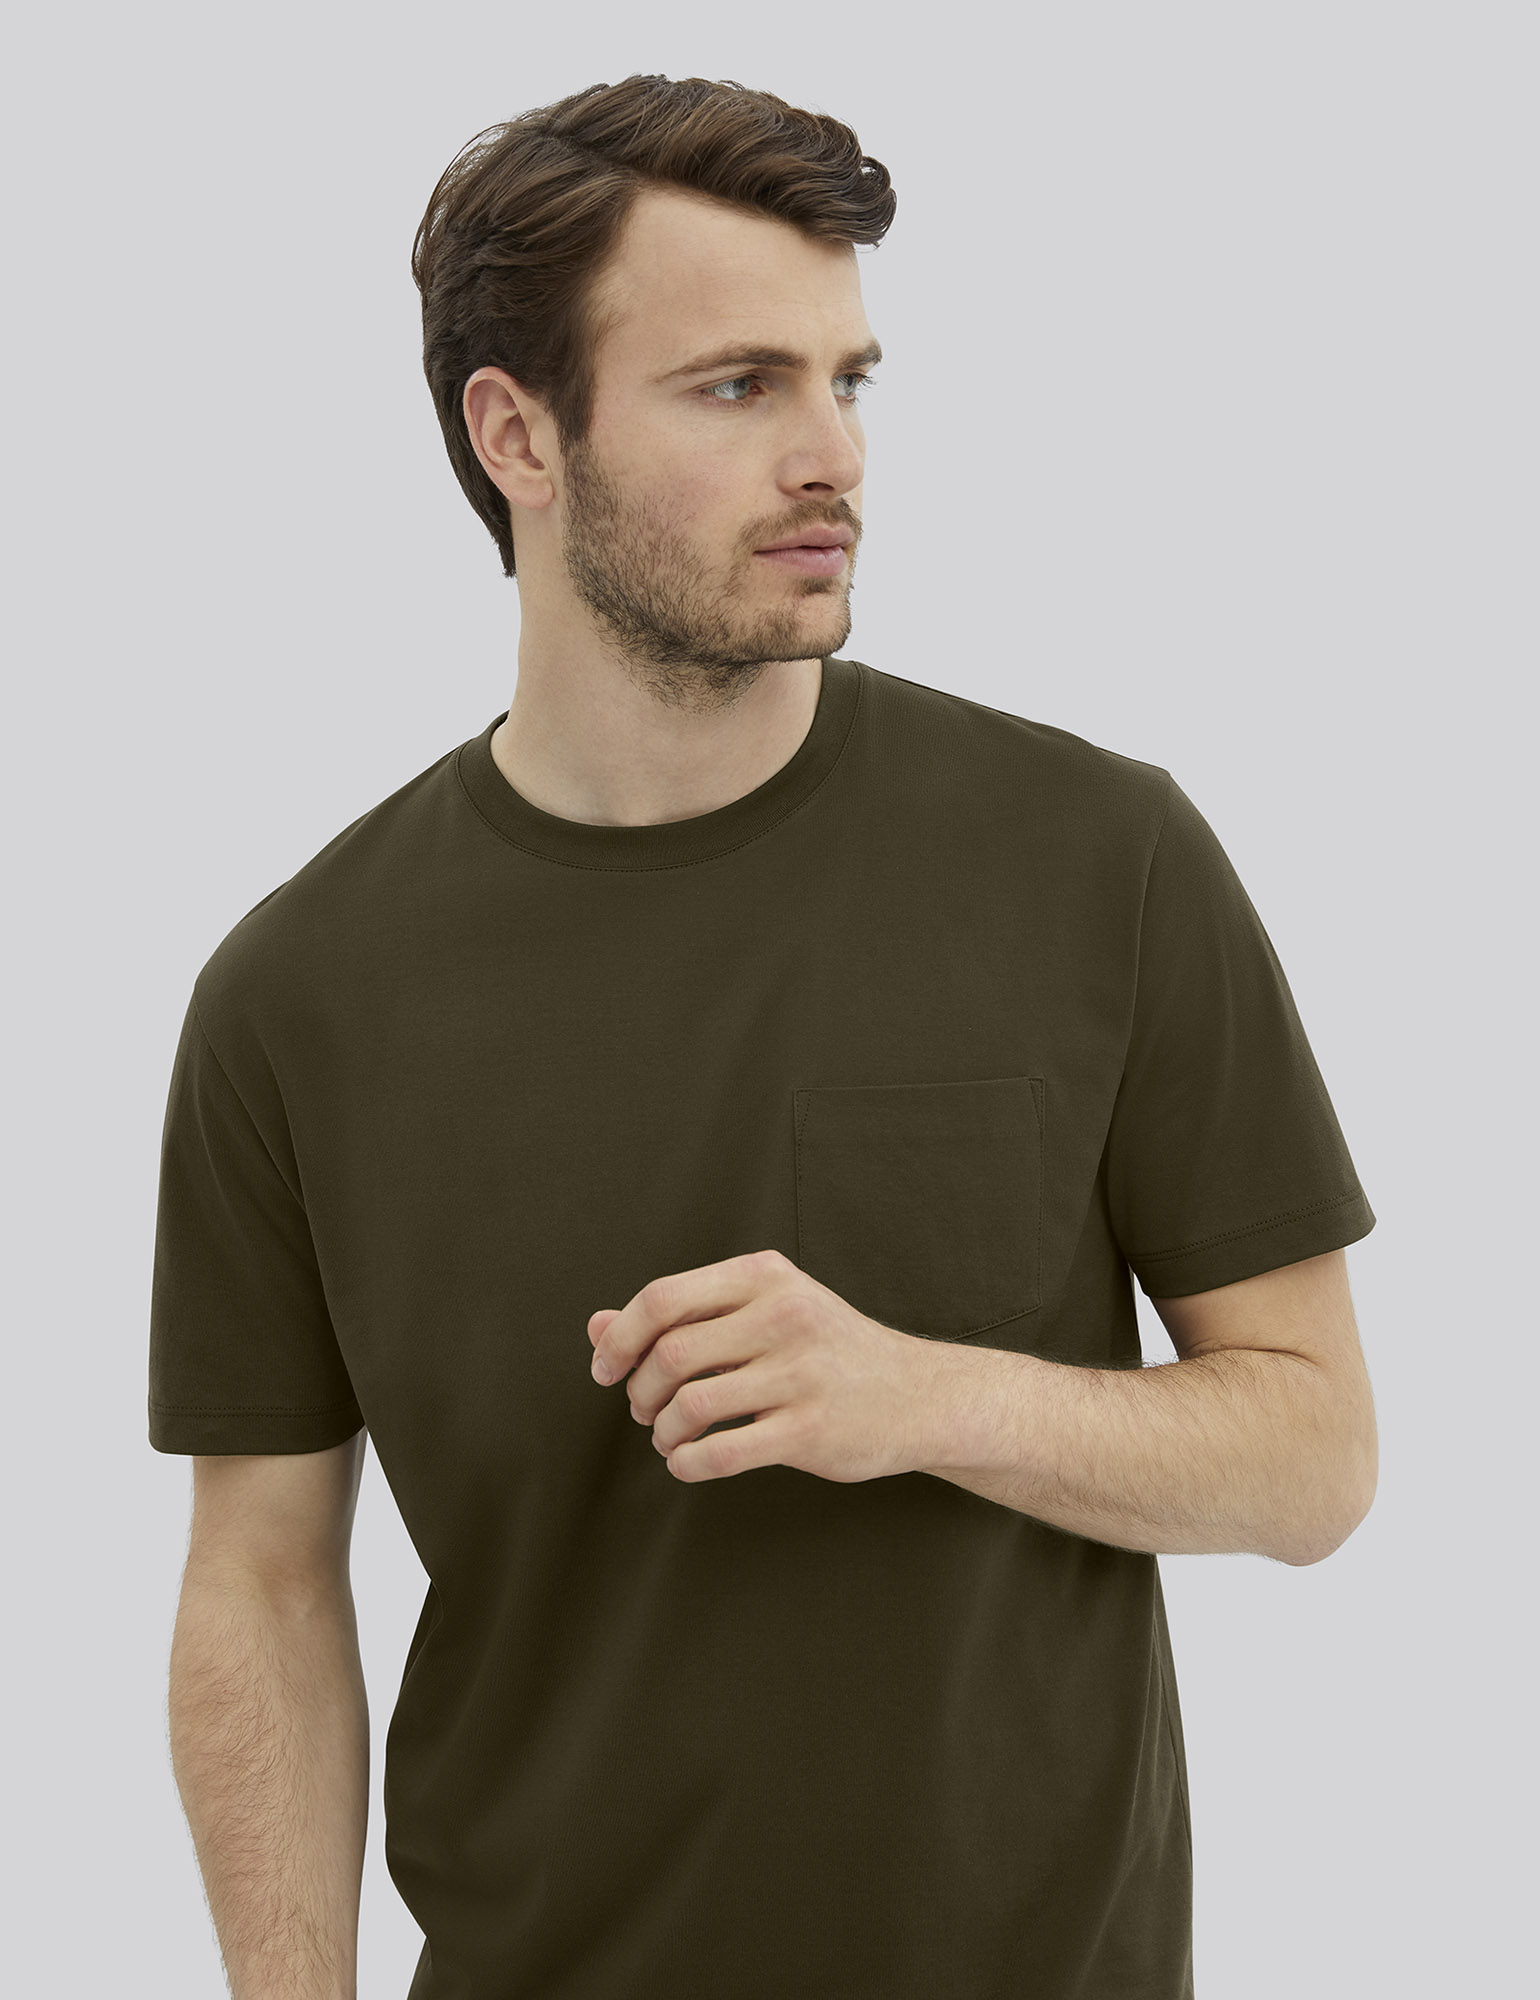 Pocket T Shirt, men's t-shirts